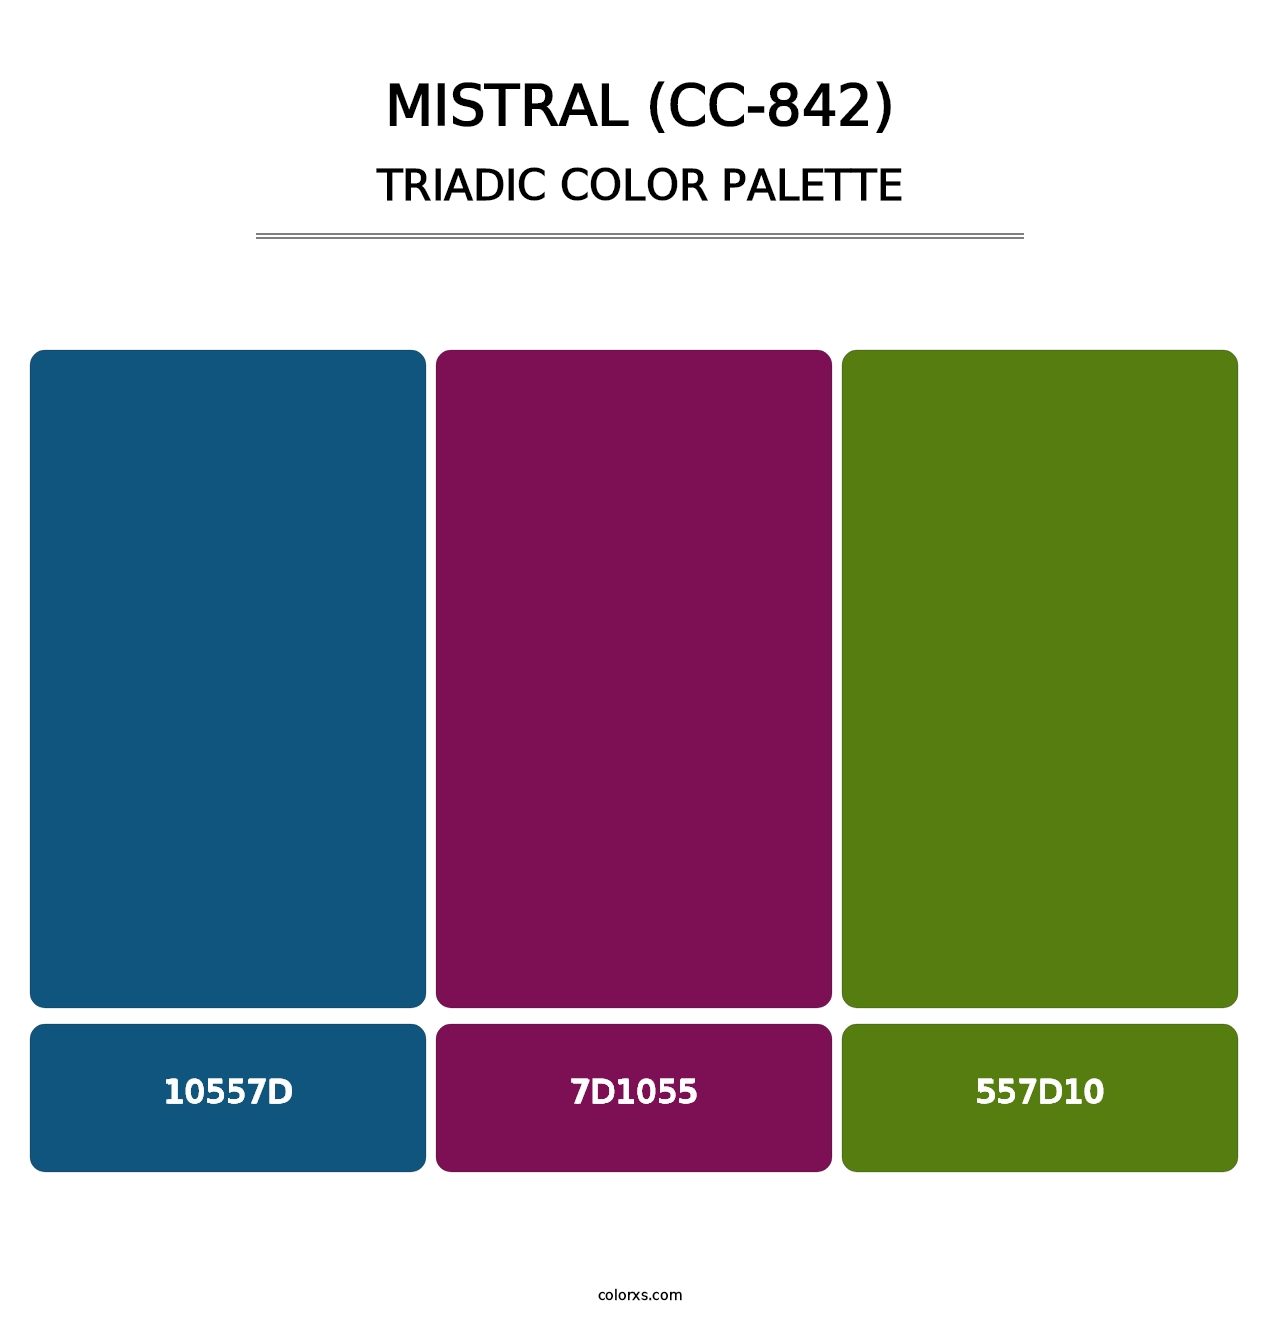 Mistral (CC-842) - Triadic Color Palette